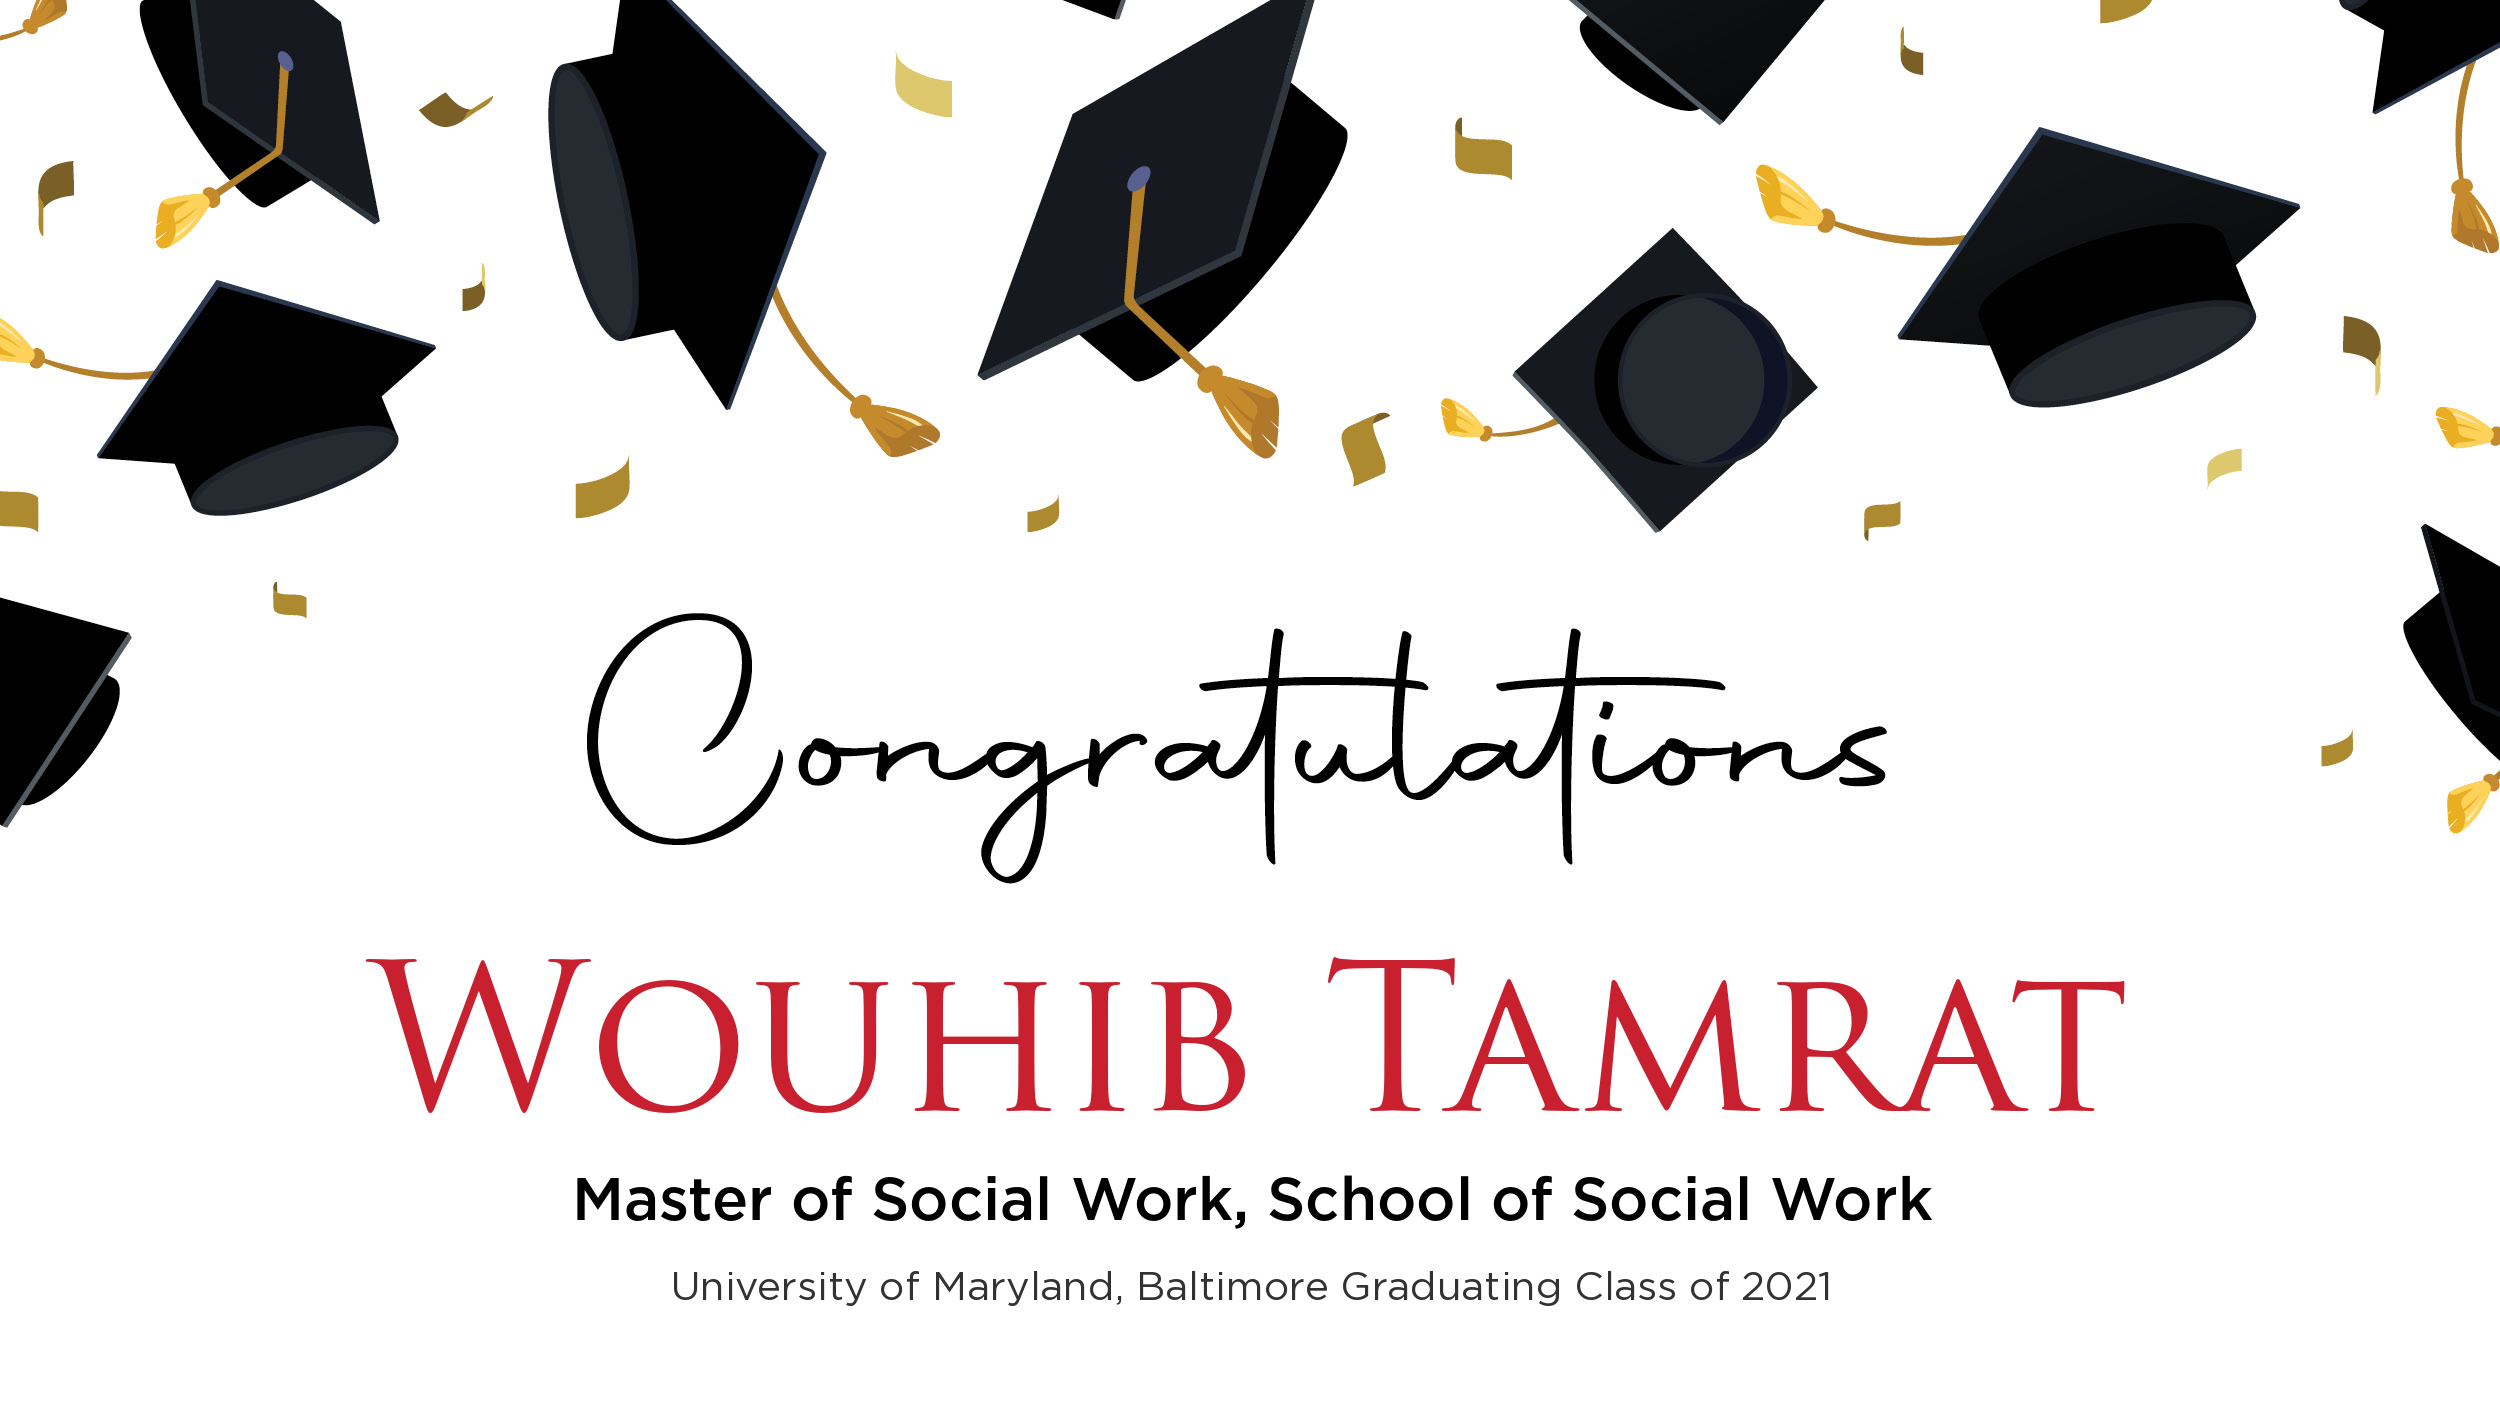 Congratulations Wouhib Tamrat, Master of Social Work